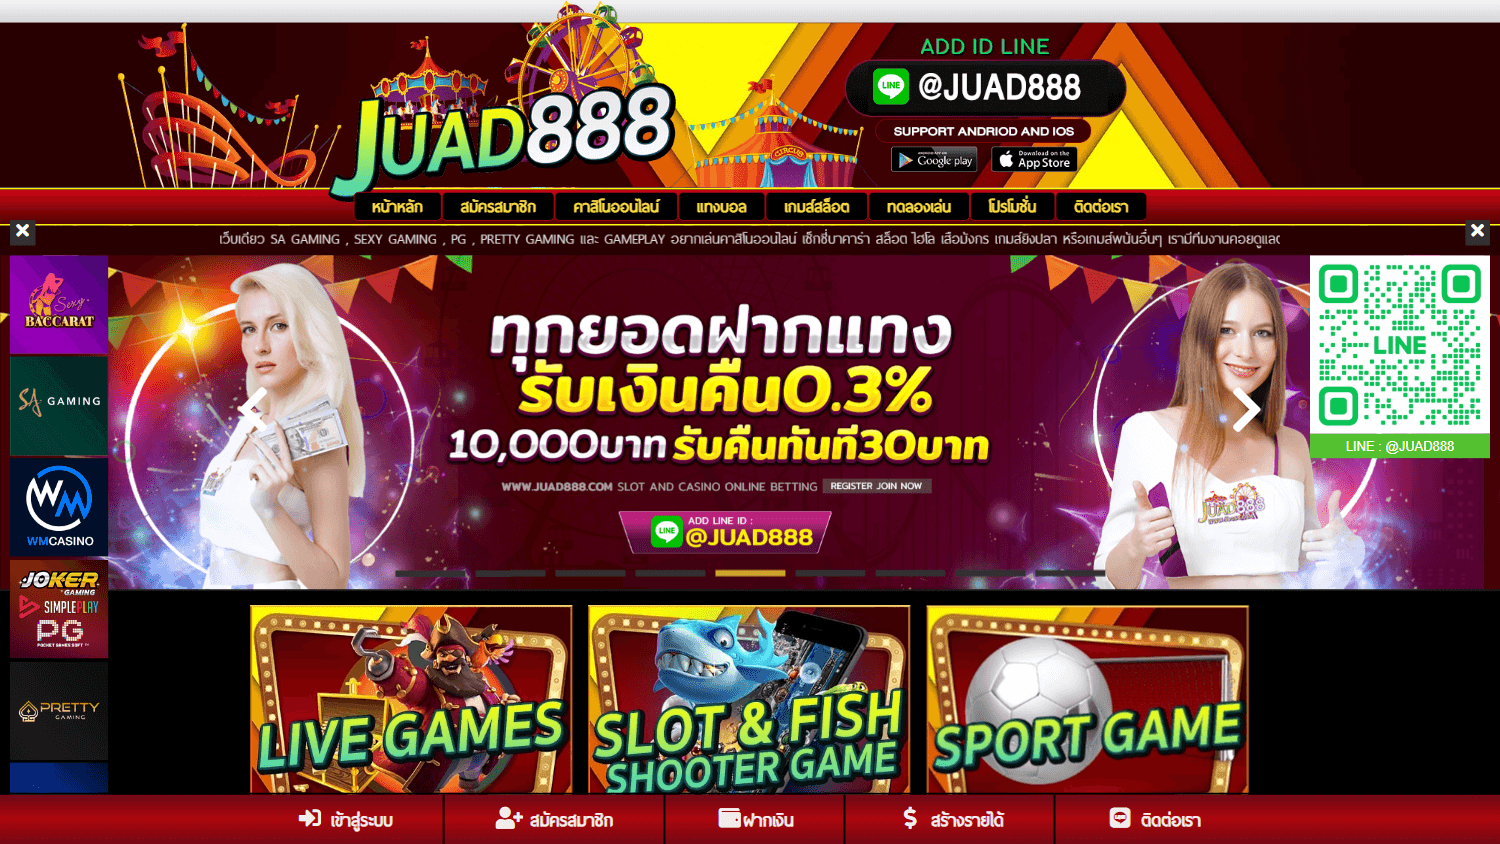 juad888_casino_homepage_desktop